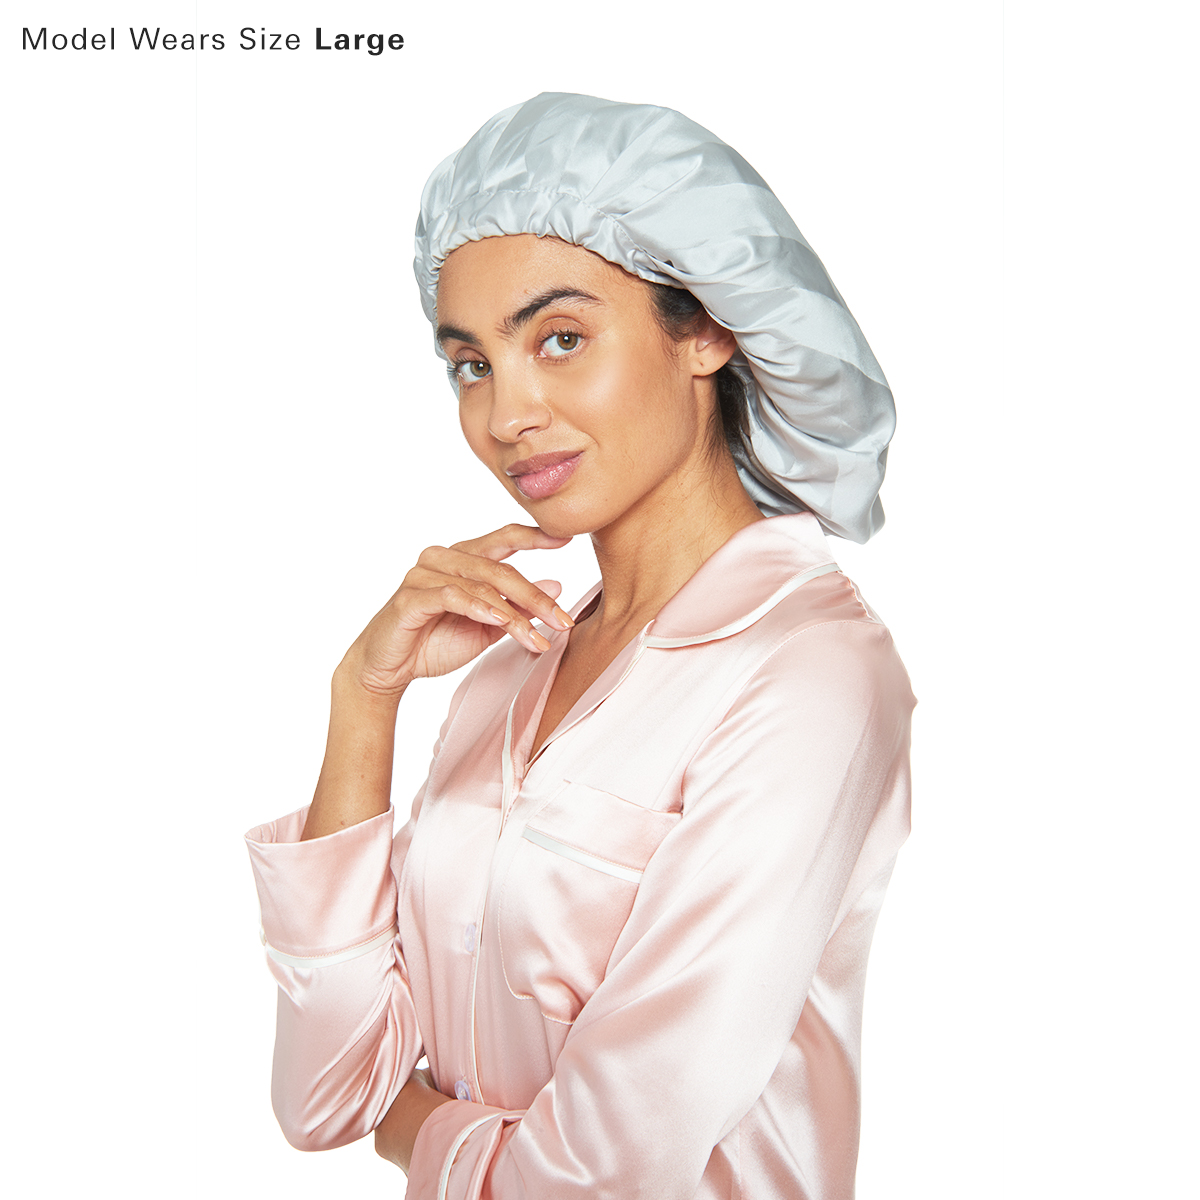 Silk Night Sleeping Cap Bonnet with Comfort Elastic Band - MYK Silk #color_silver stripes